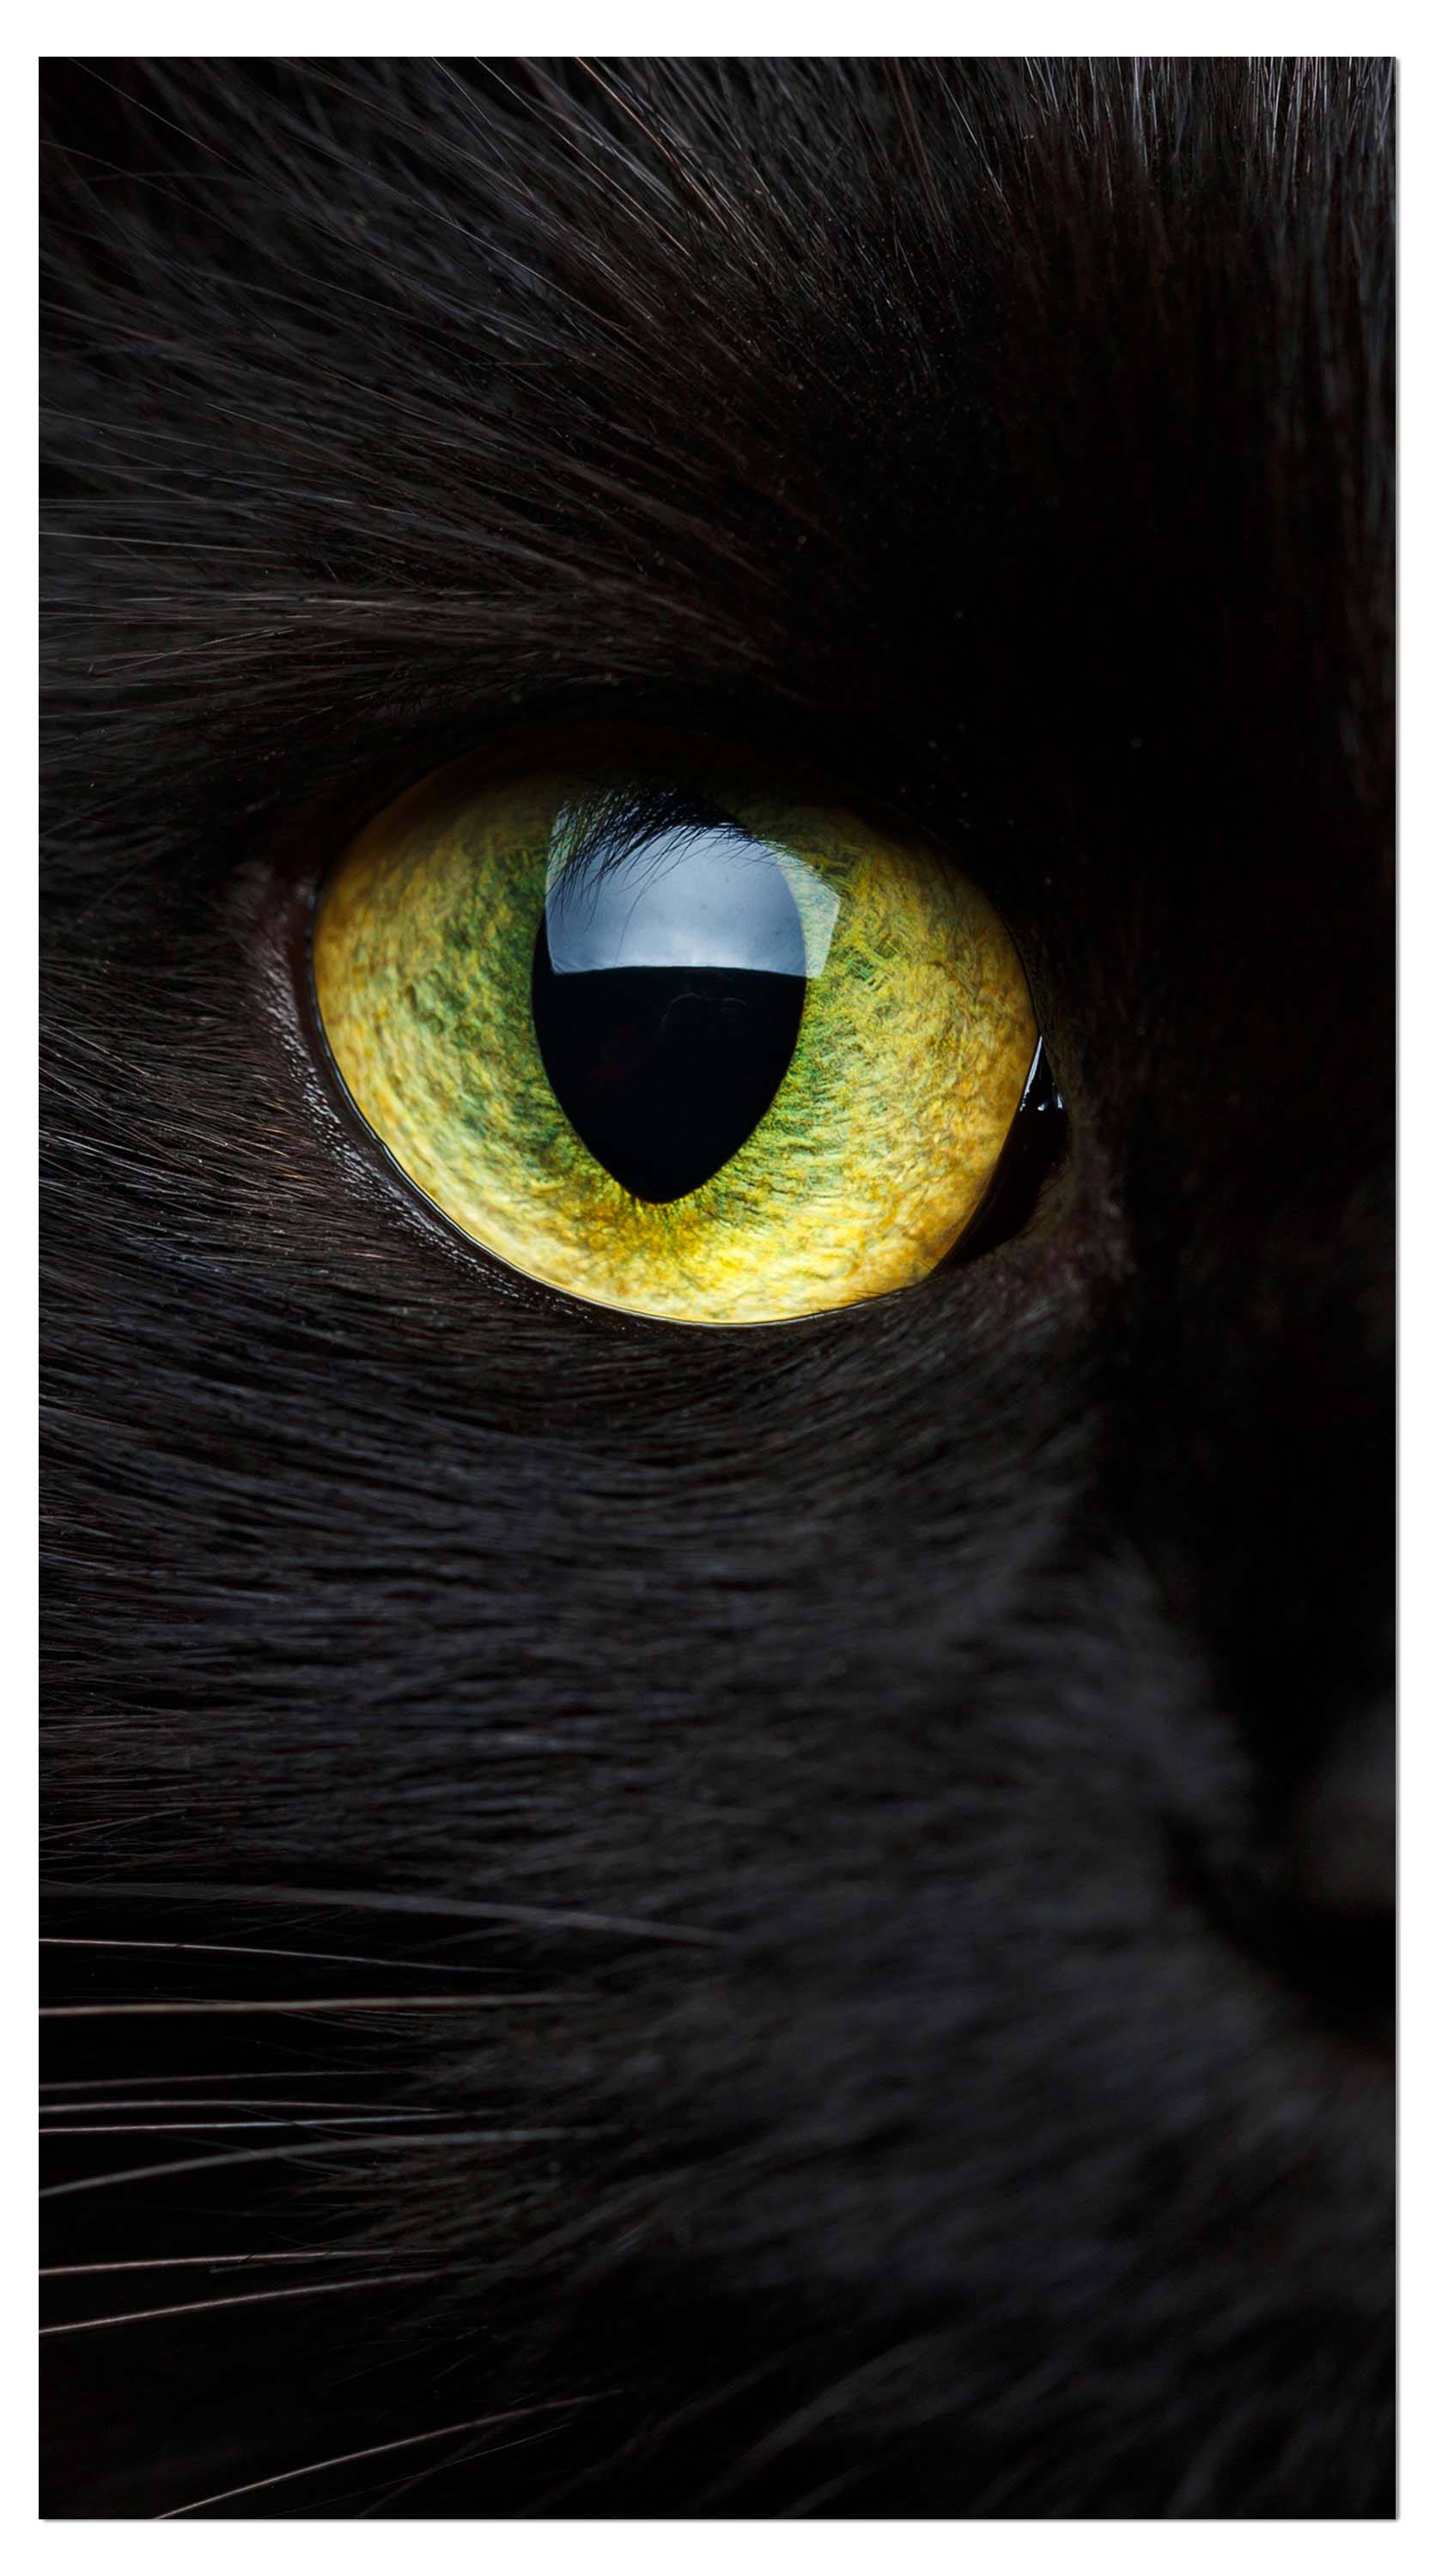 Garderobe Nahaufnahme der schwarzen Katze M1013 entdecken - Bild 4